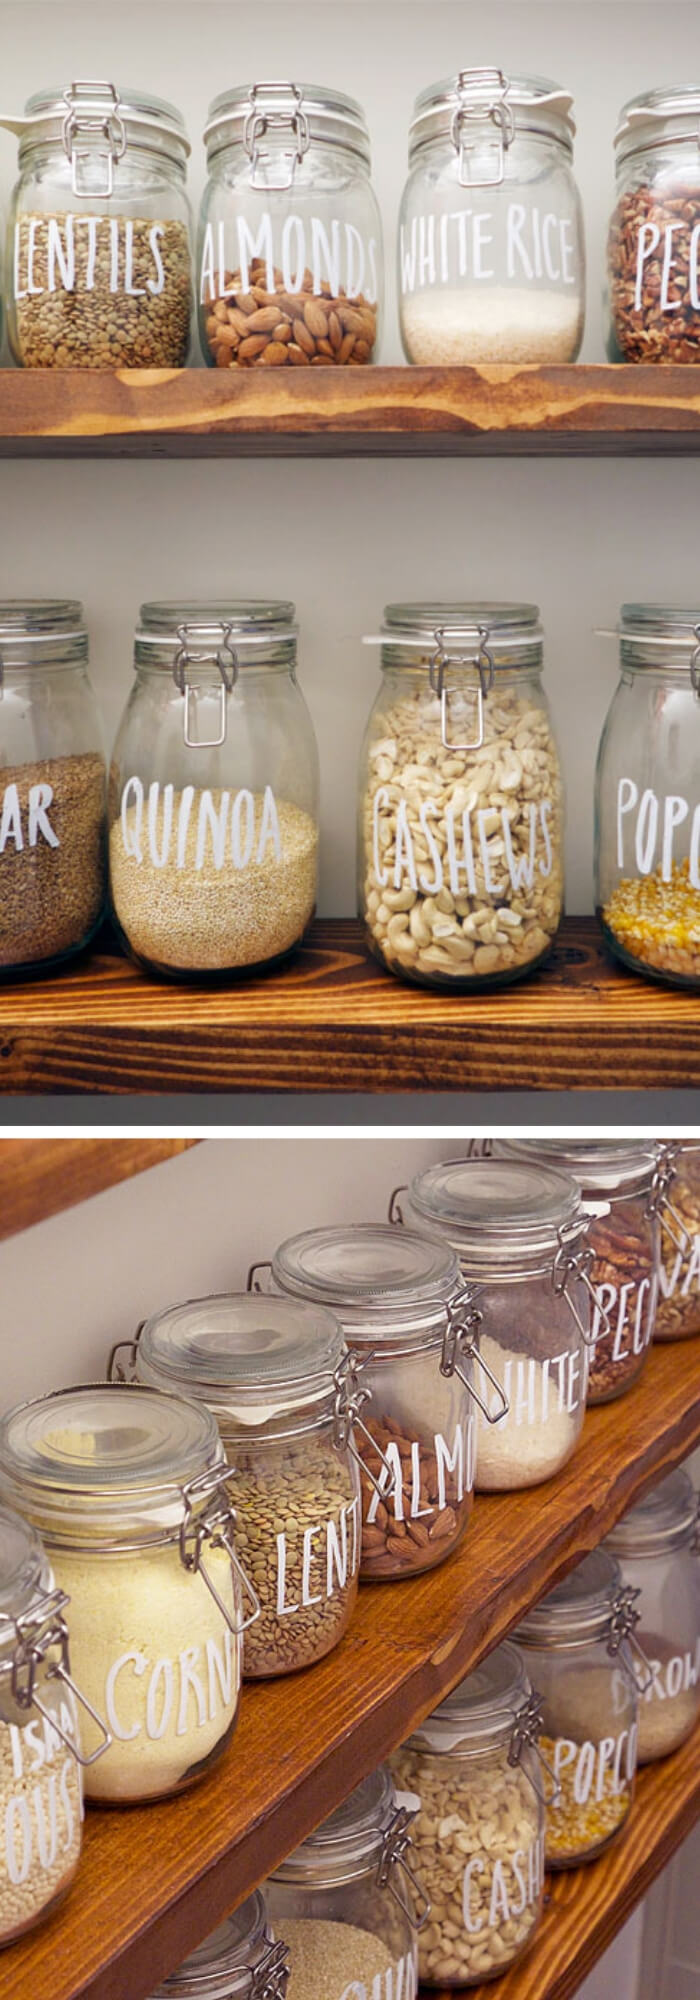 Storage dry goods with mason jars | Inspiring Farmhouse Kitchen Design & Decor Ideas